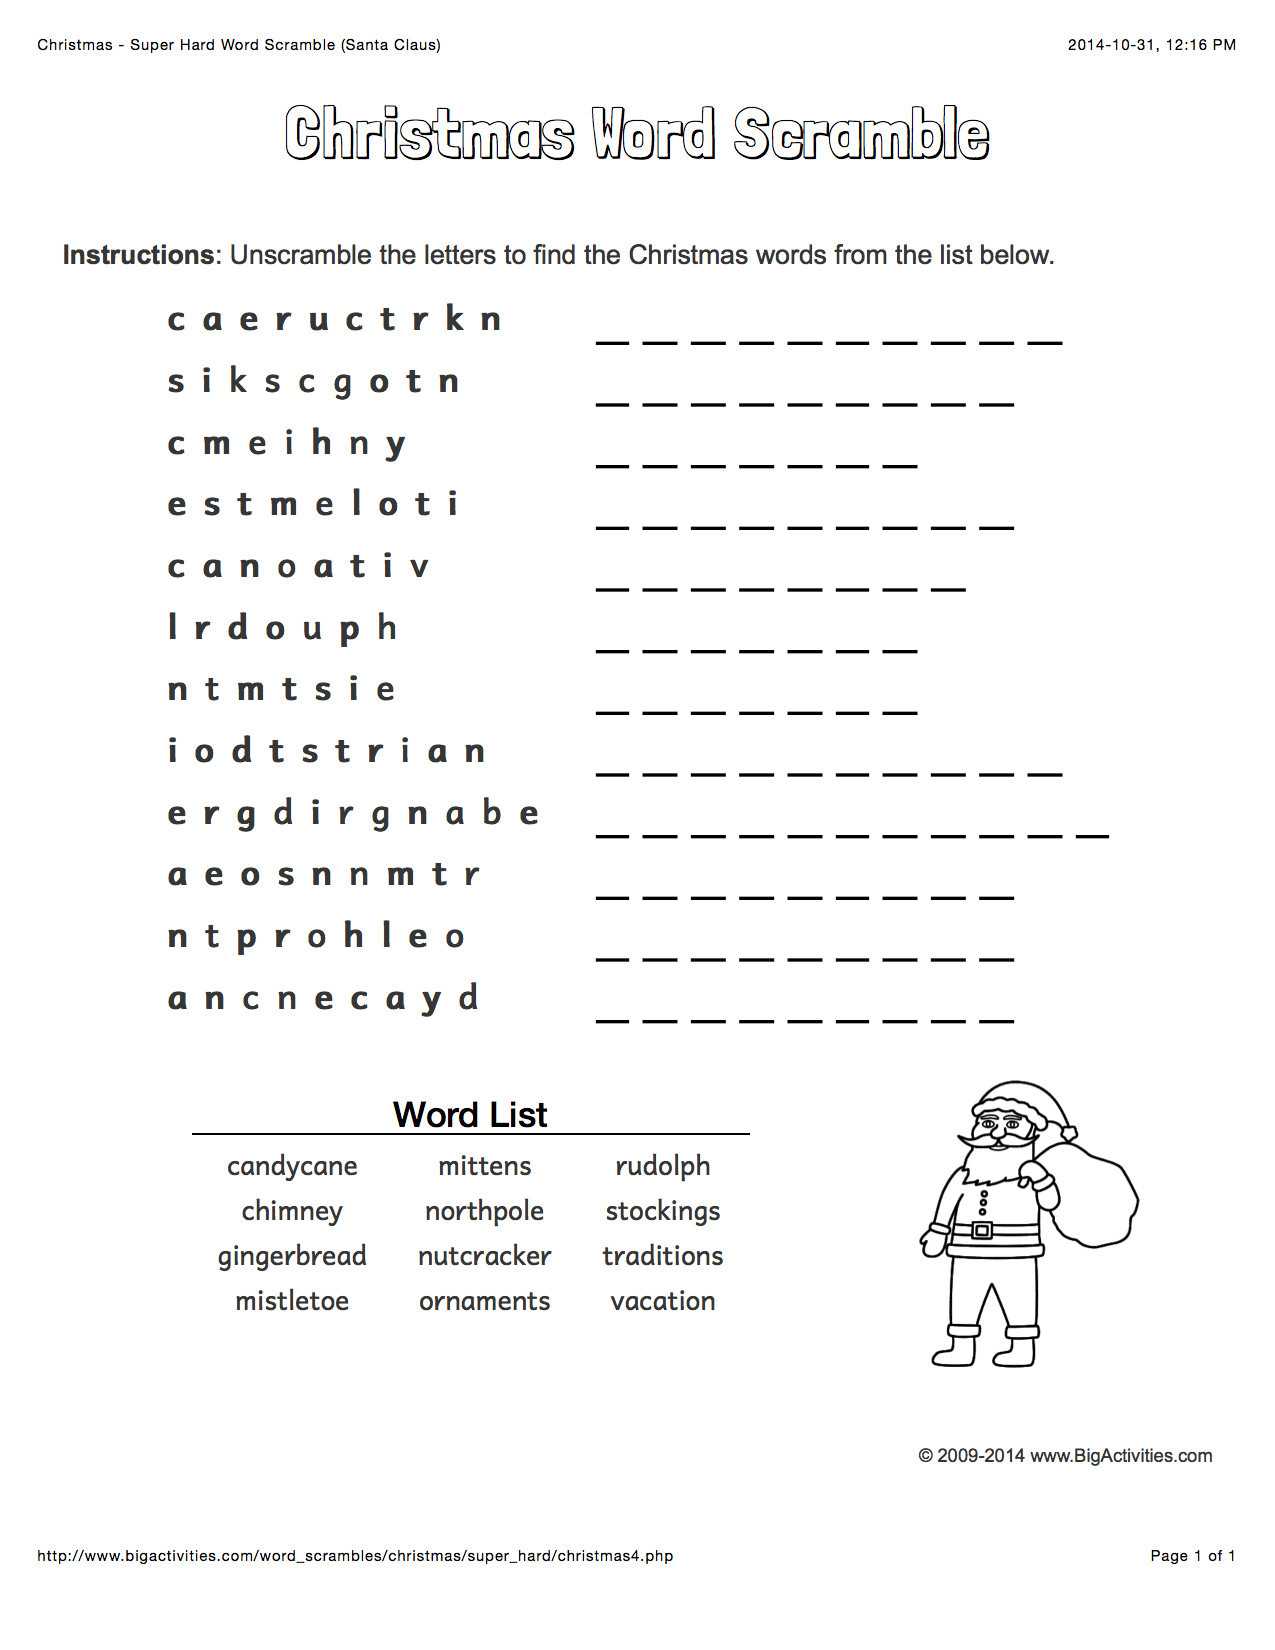 Unscramble Sentences Worksheets 1st Grade together with Free Sentence Scramble Worksheets Beautiful 38 Best Word Scrambles